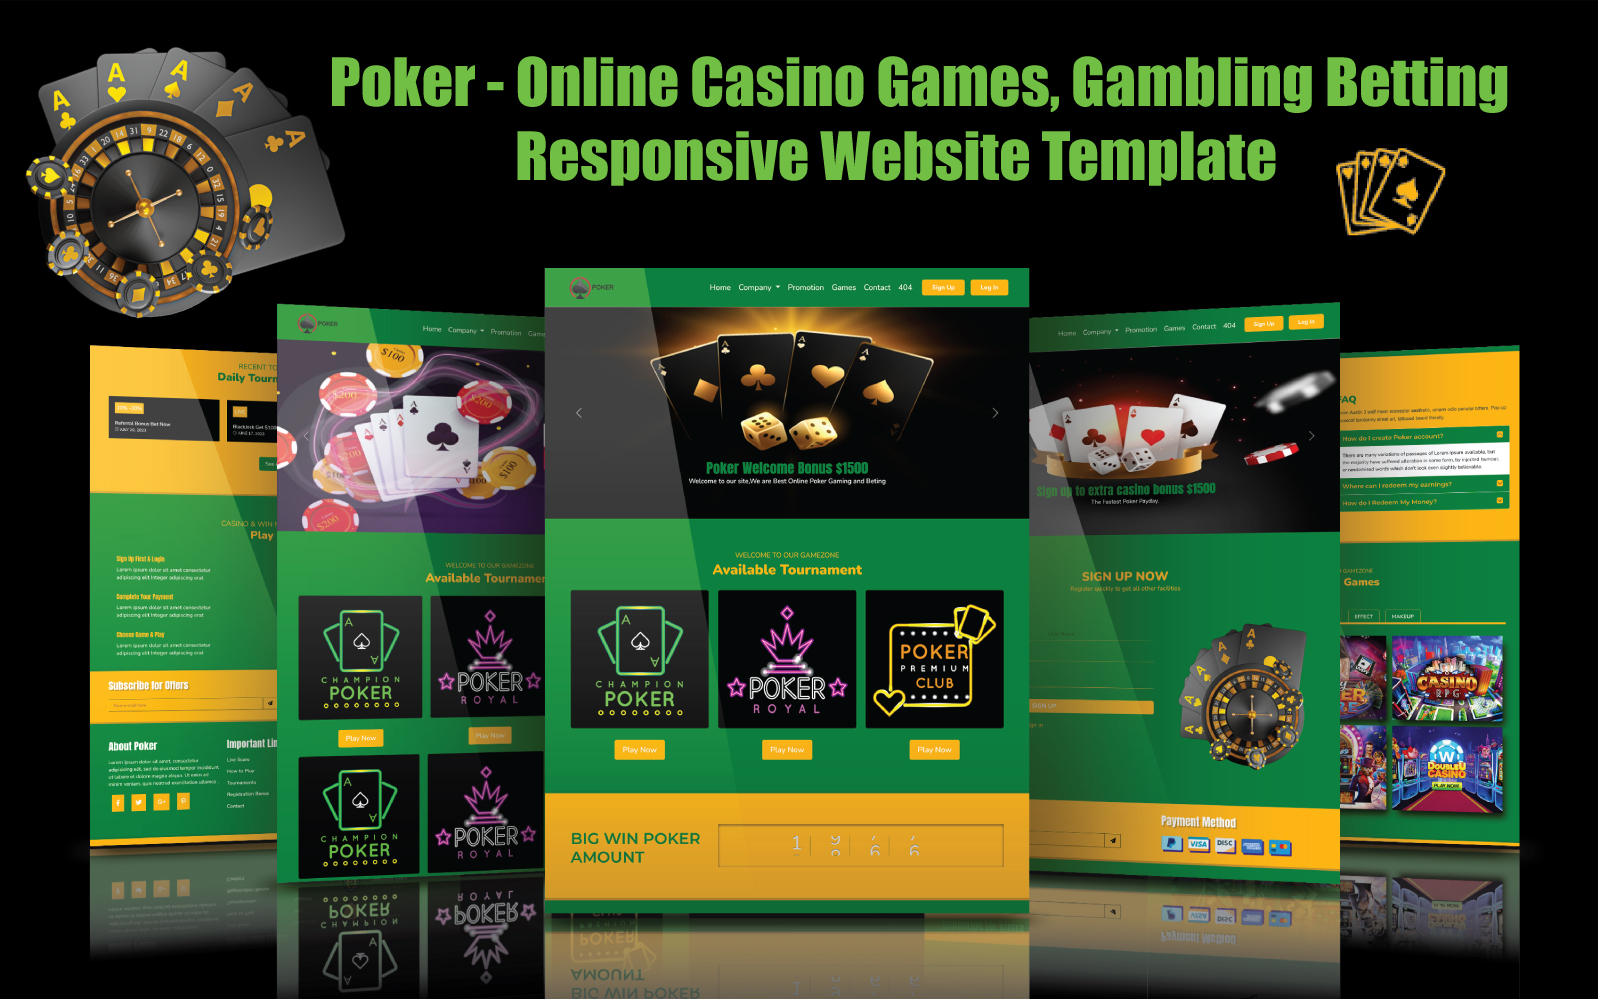 Poker - Online Casino Games, Gambling Betting Responsive Website Template